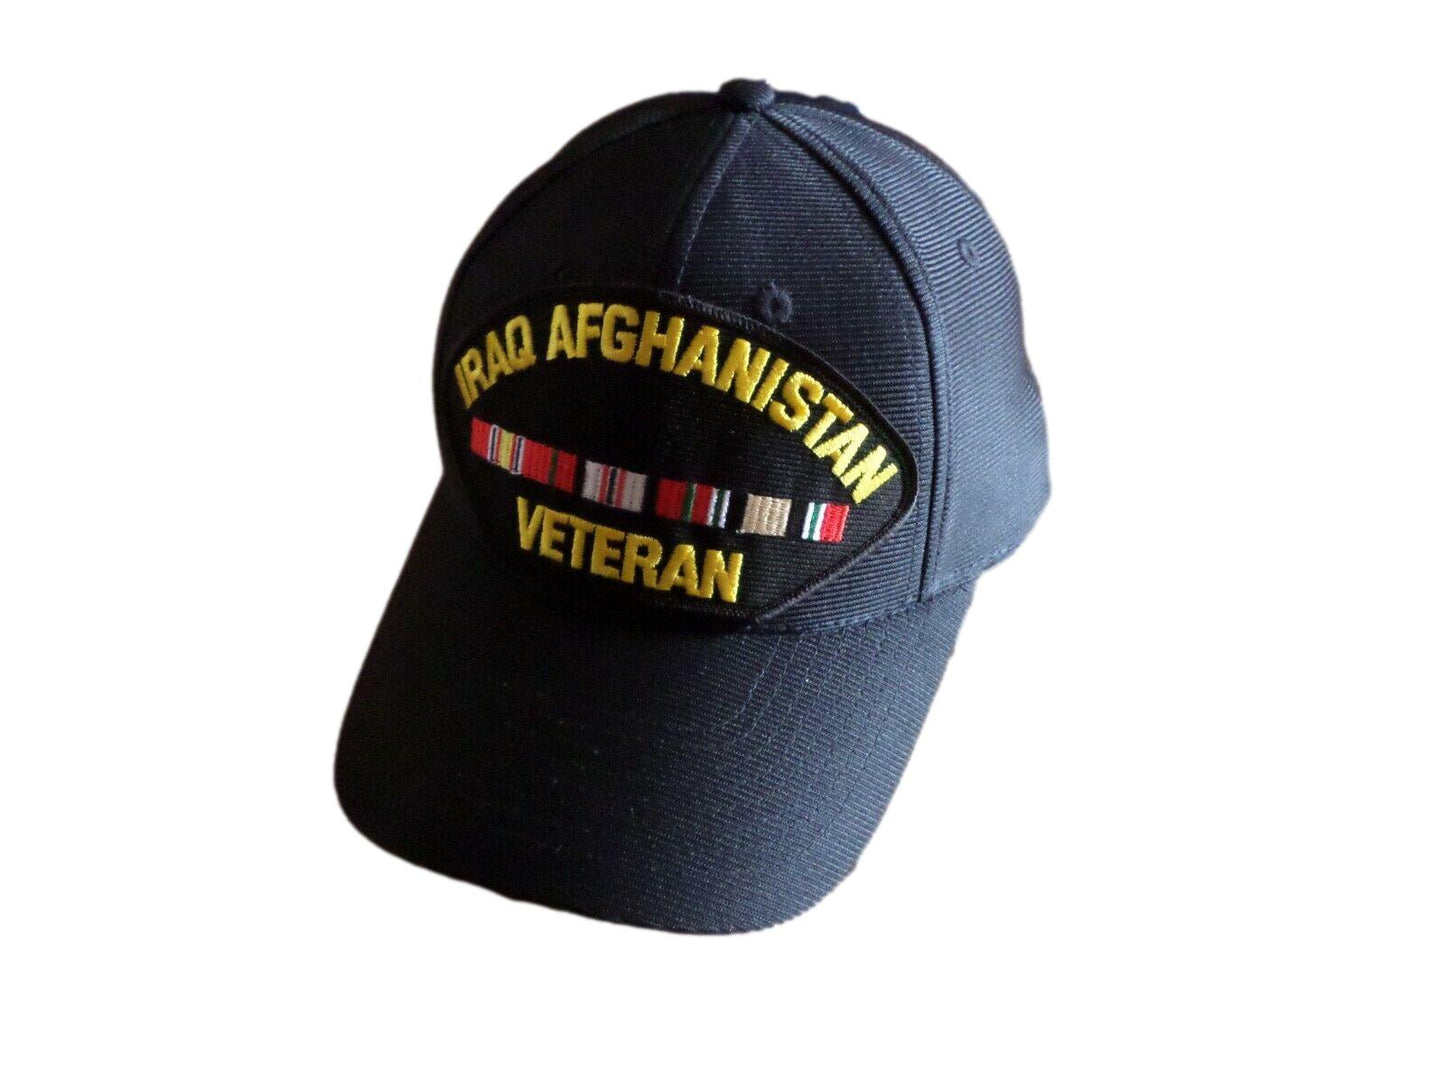 MILITARY IRAQ AFGHANISTAN VETERAN HAT U.S MILITARY OFFICIAL BALL CAP U.S.A MADE